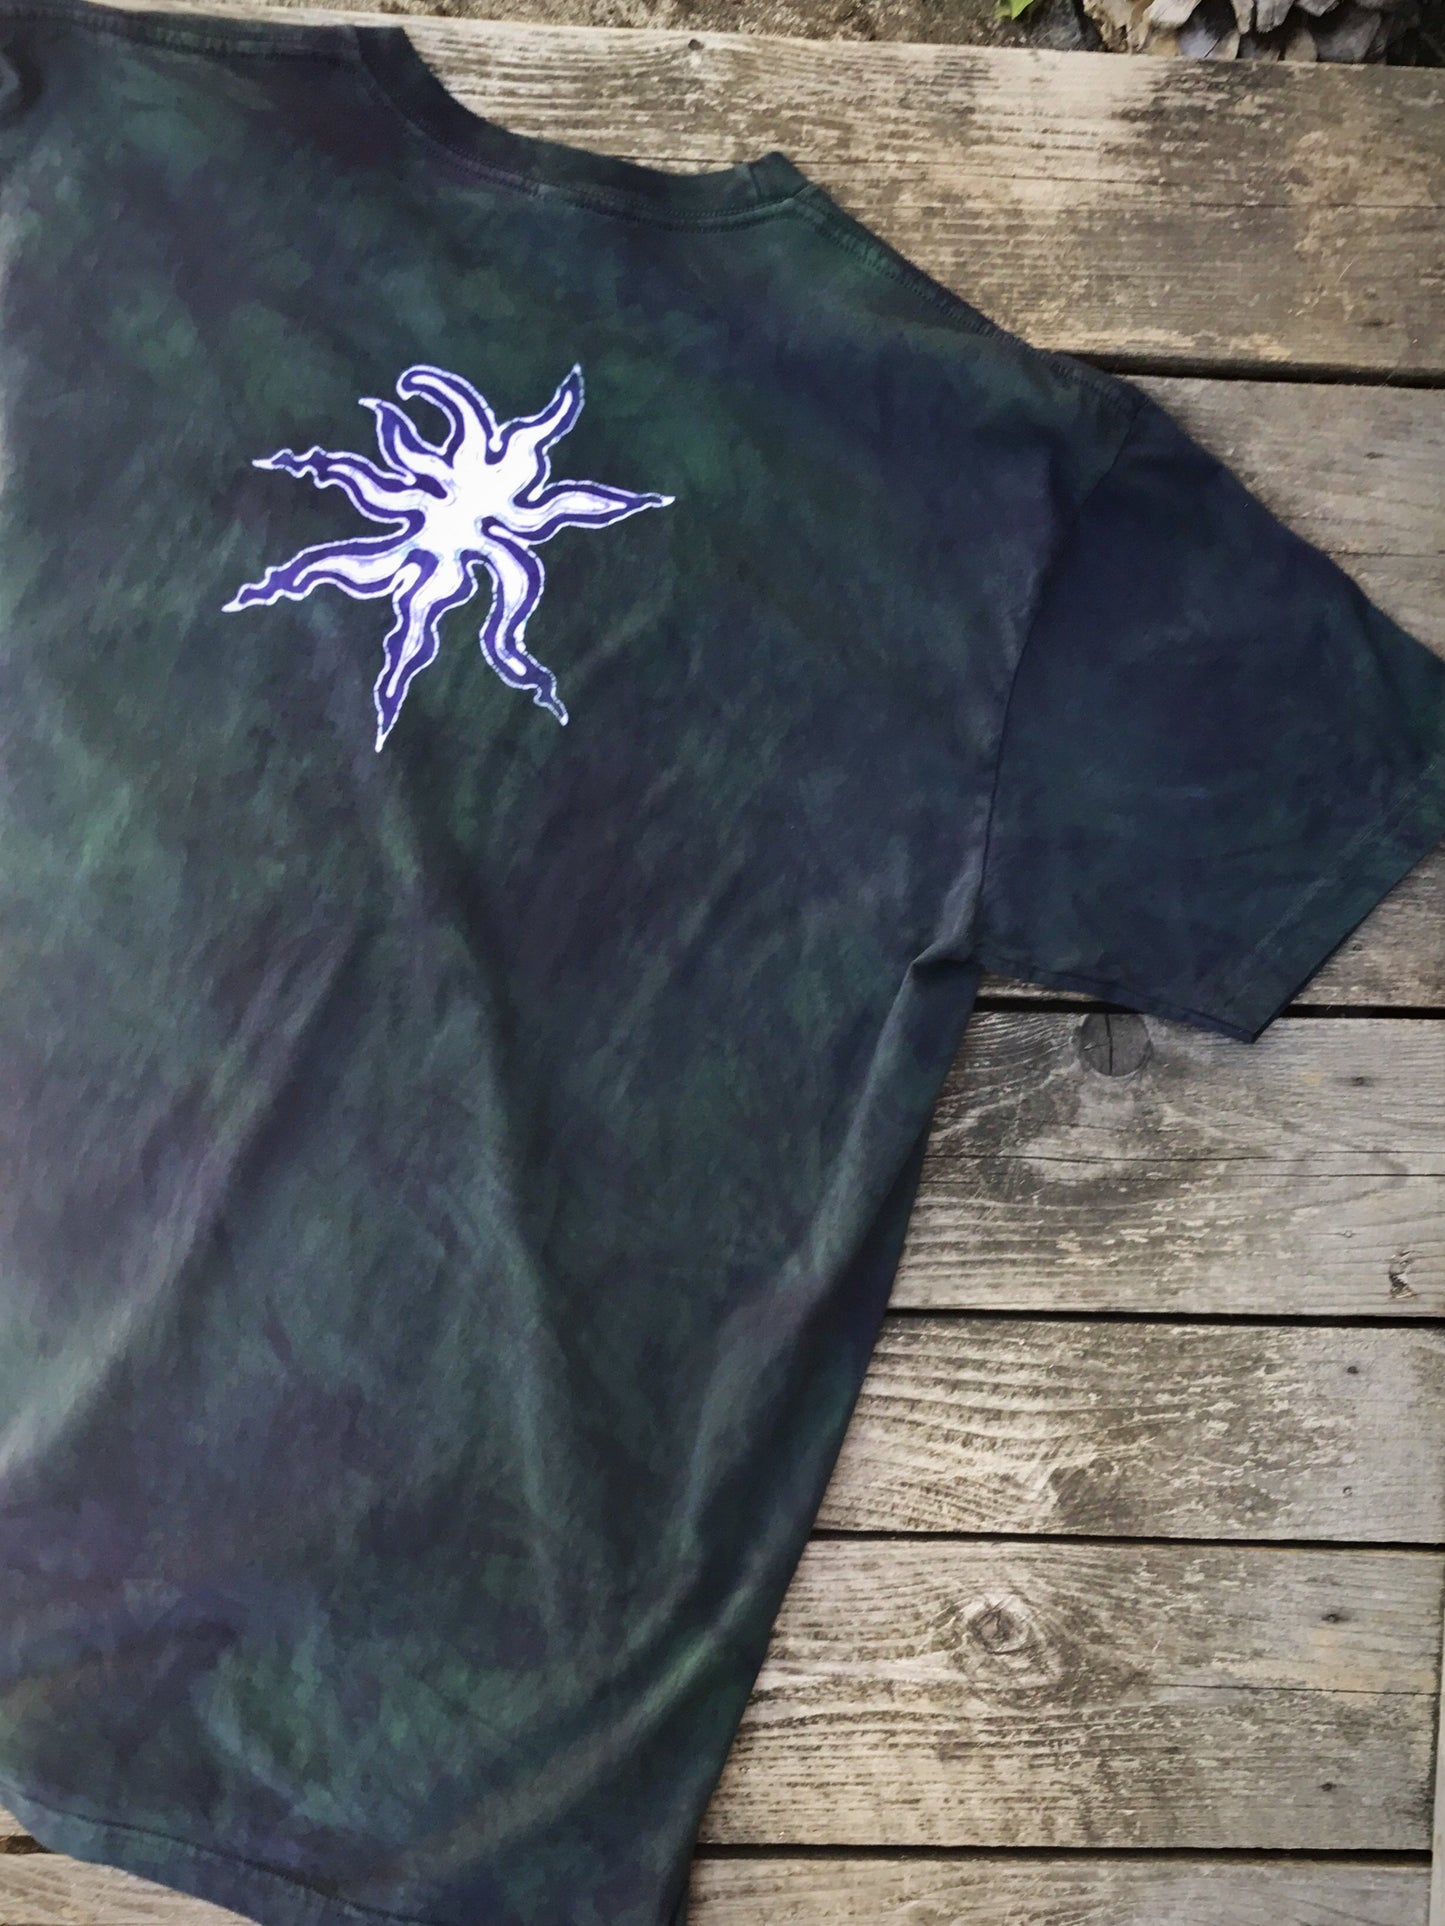 Solar Eclipse in Teal and Dark Purple Handmade Batikwalla Tshirt - Size 2X